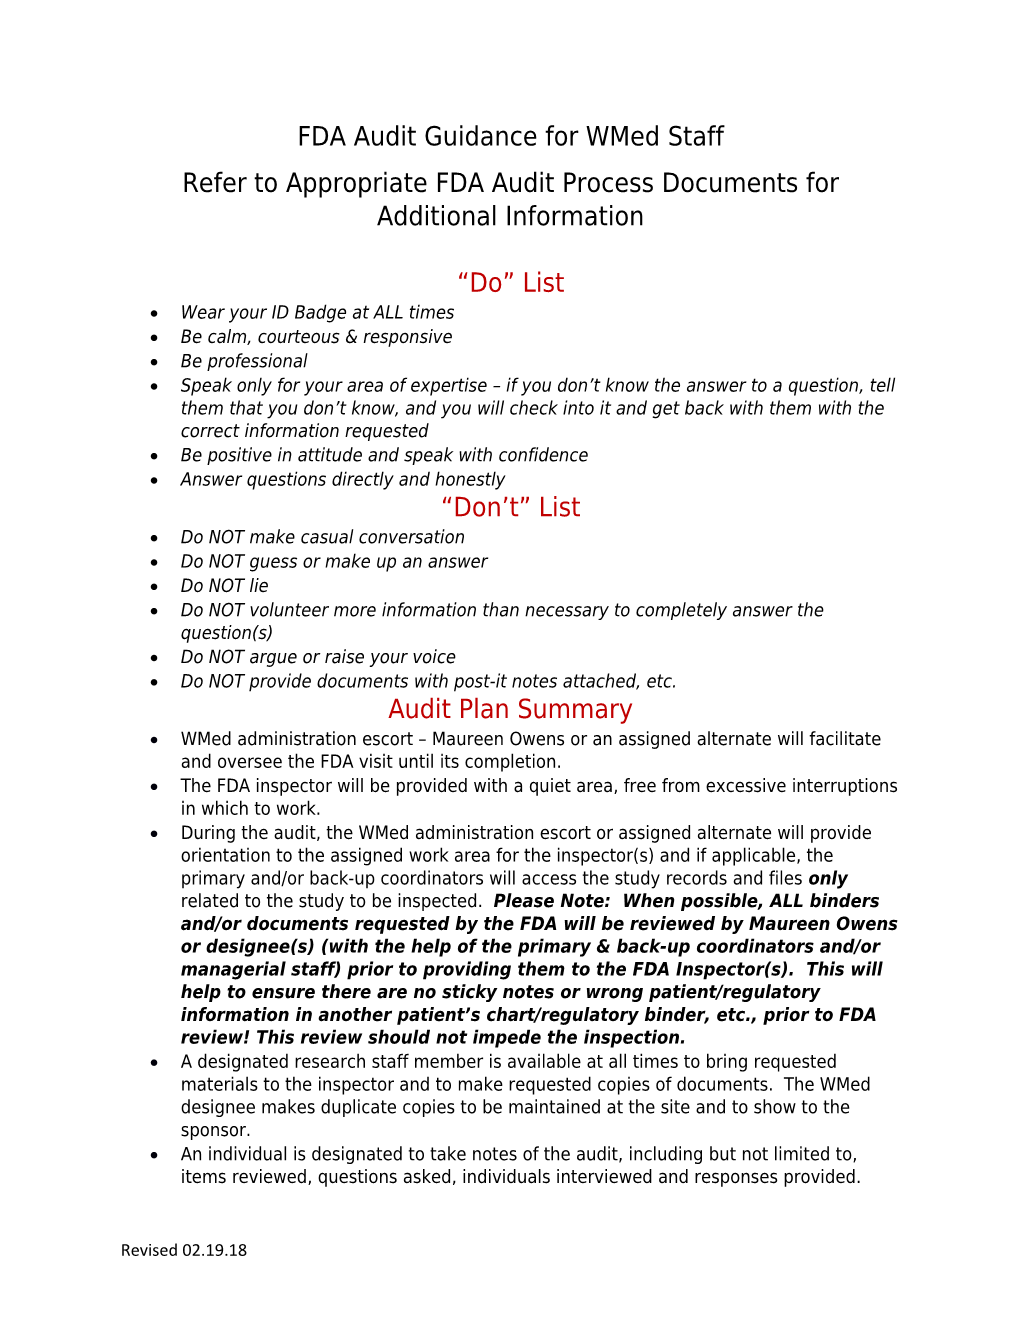 FDA Audit Guidance for Wmed Staff